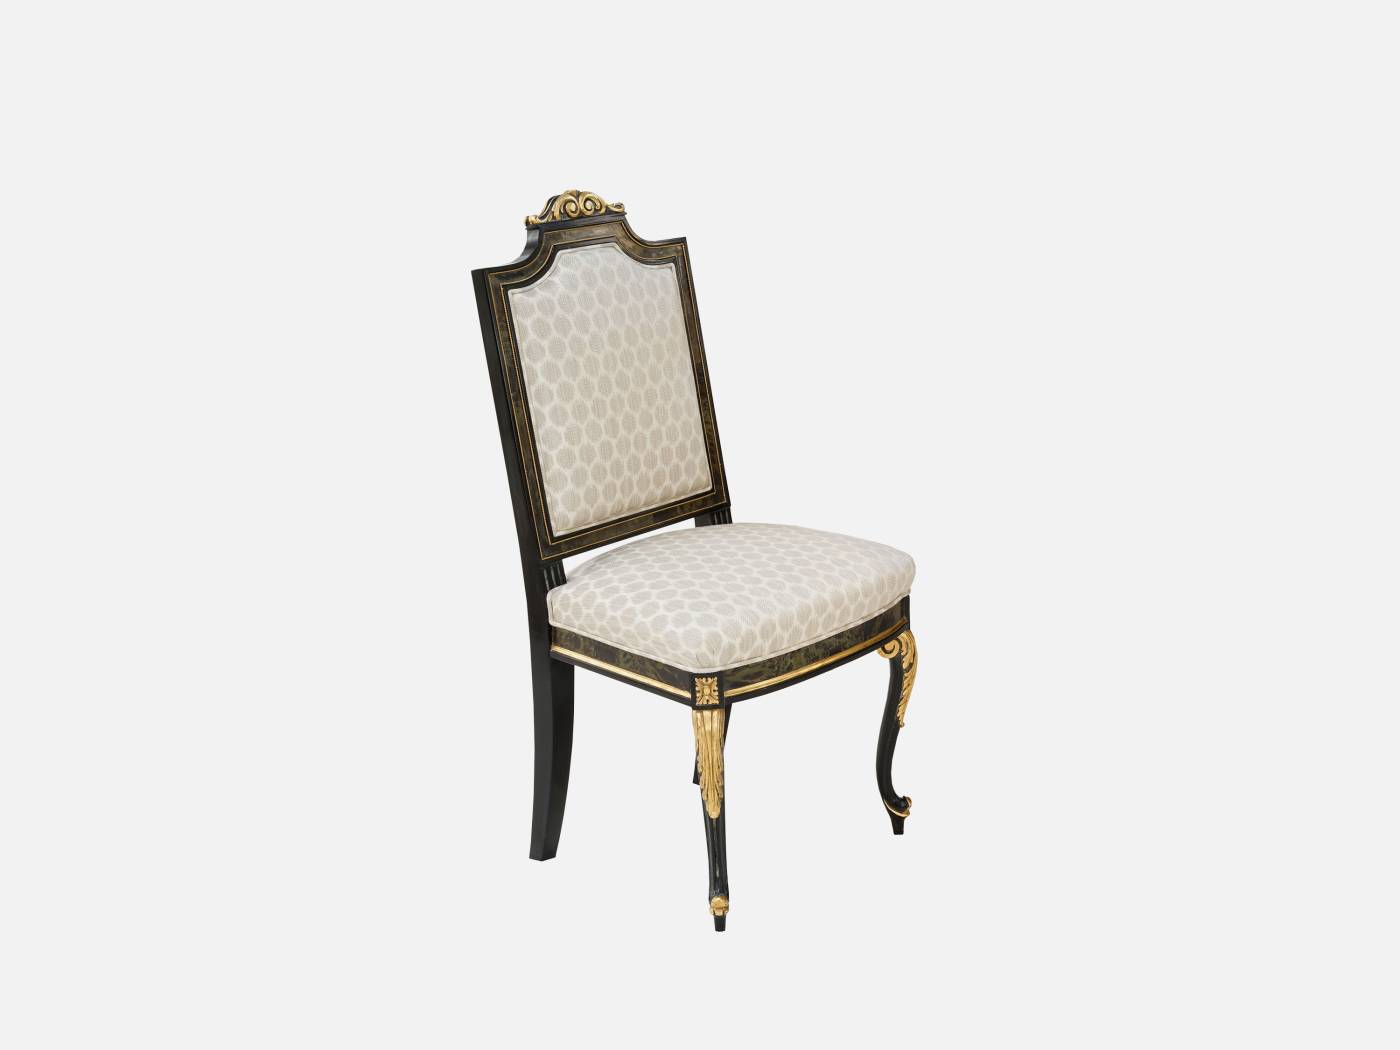 ART. 2194 – C.G. Capelletti Italian Luxury Classic Chairs. Made in Italy classic interior design